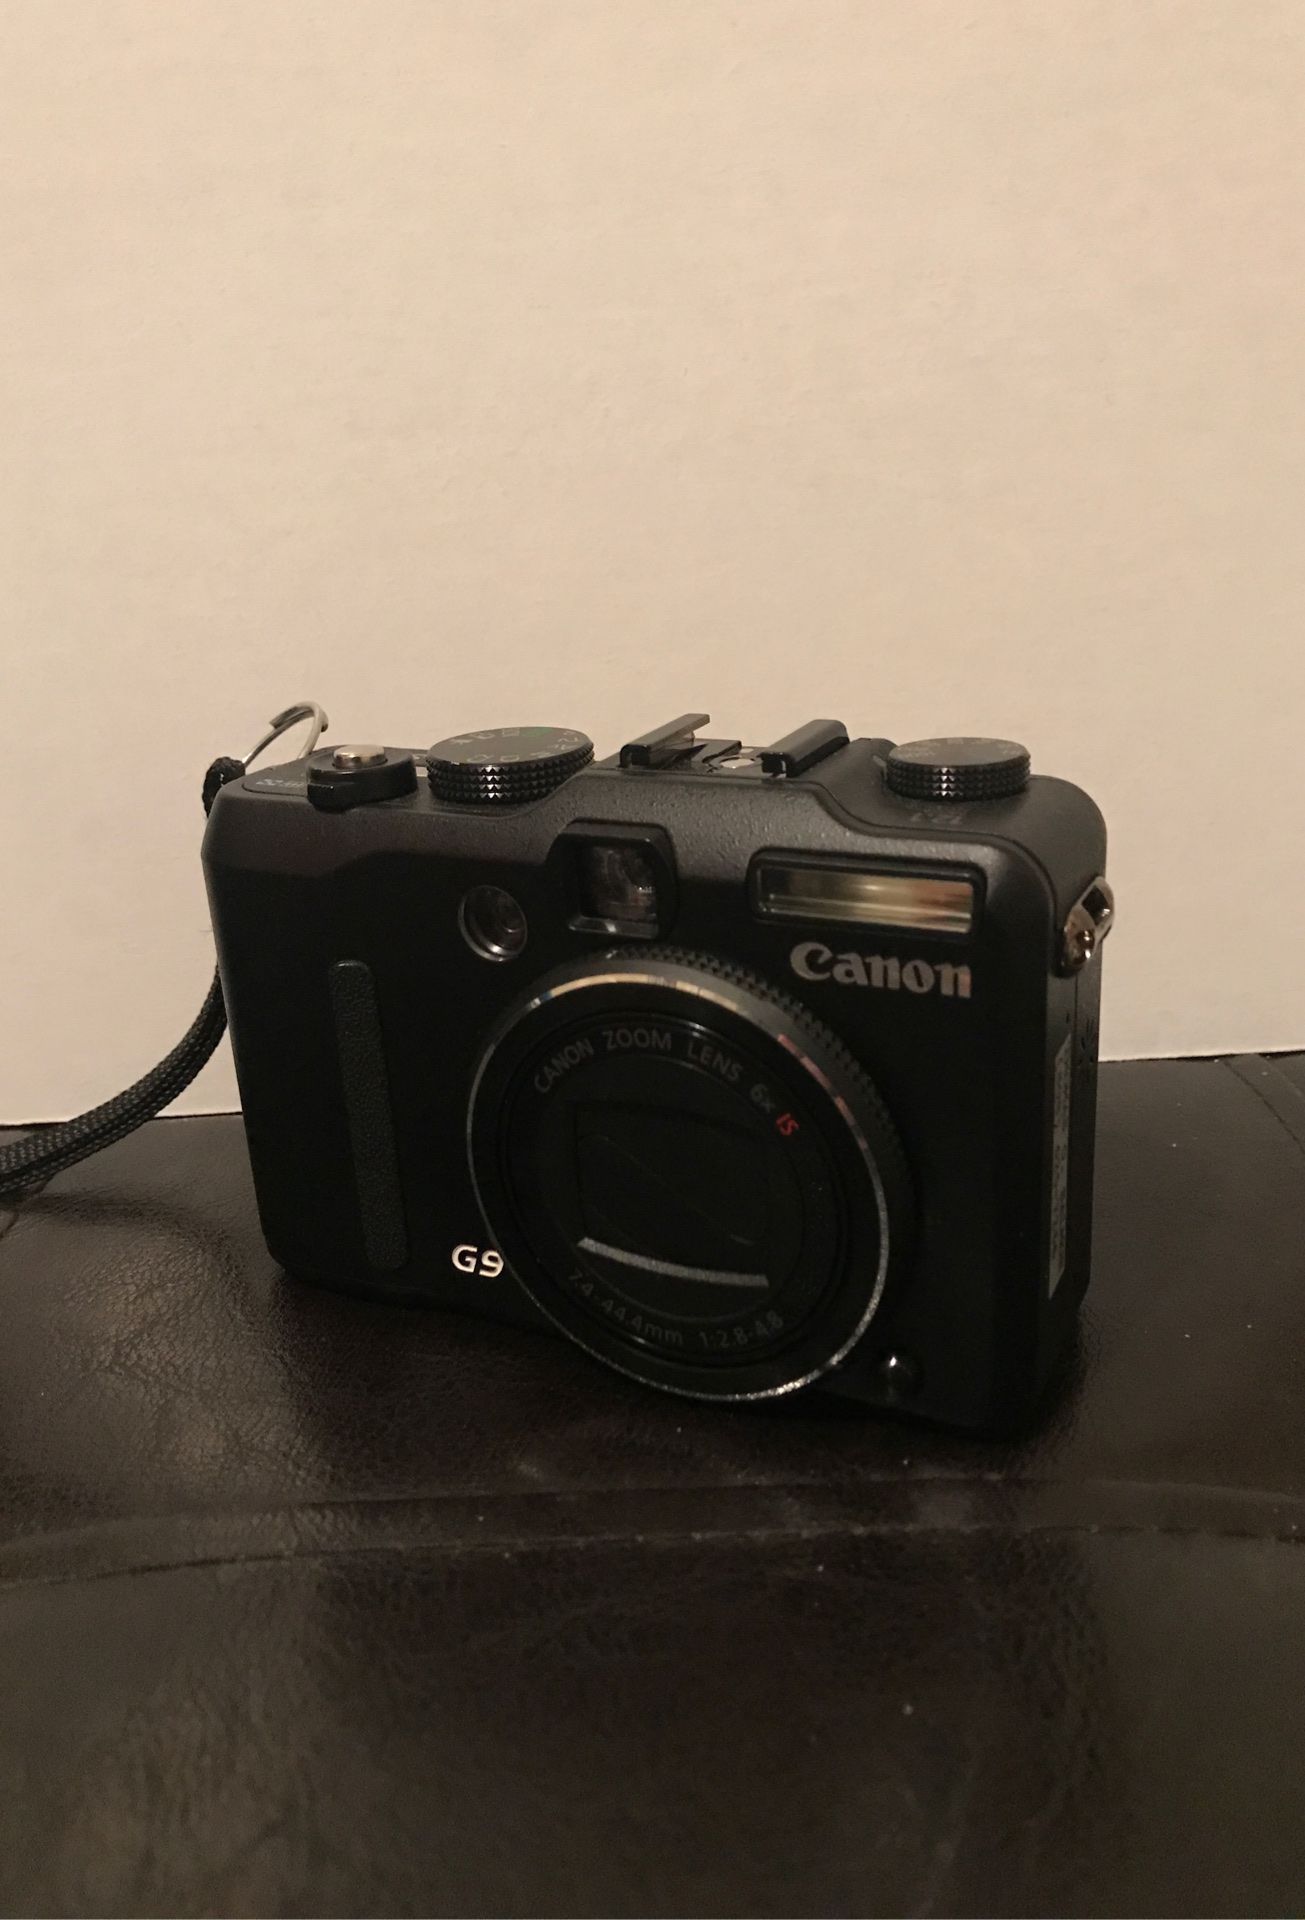 Canon G9 digital camera